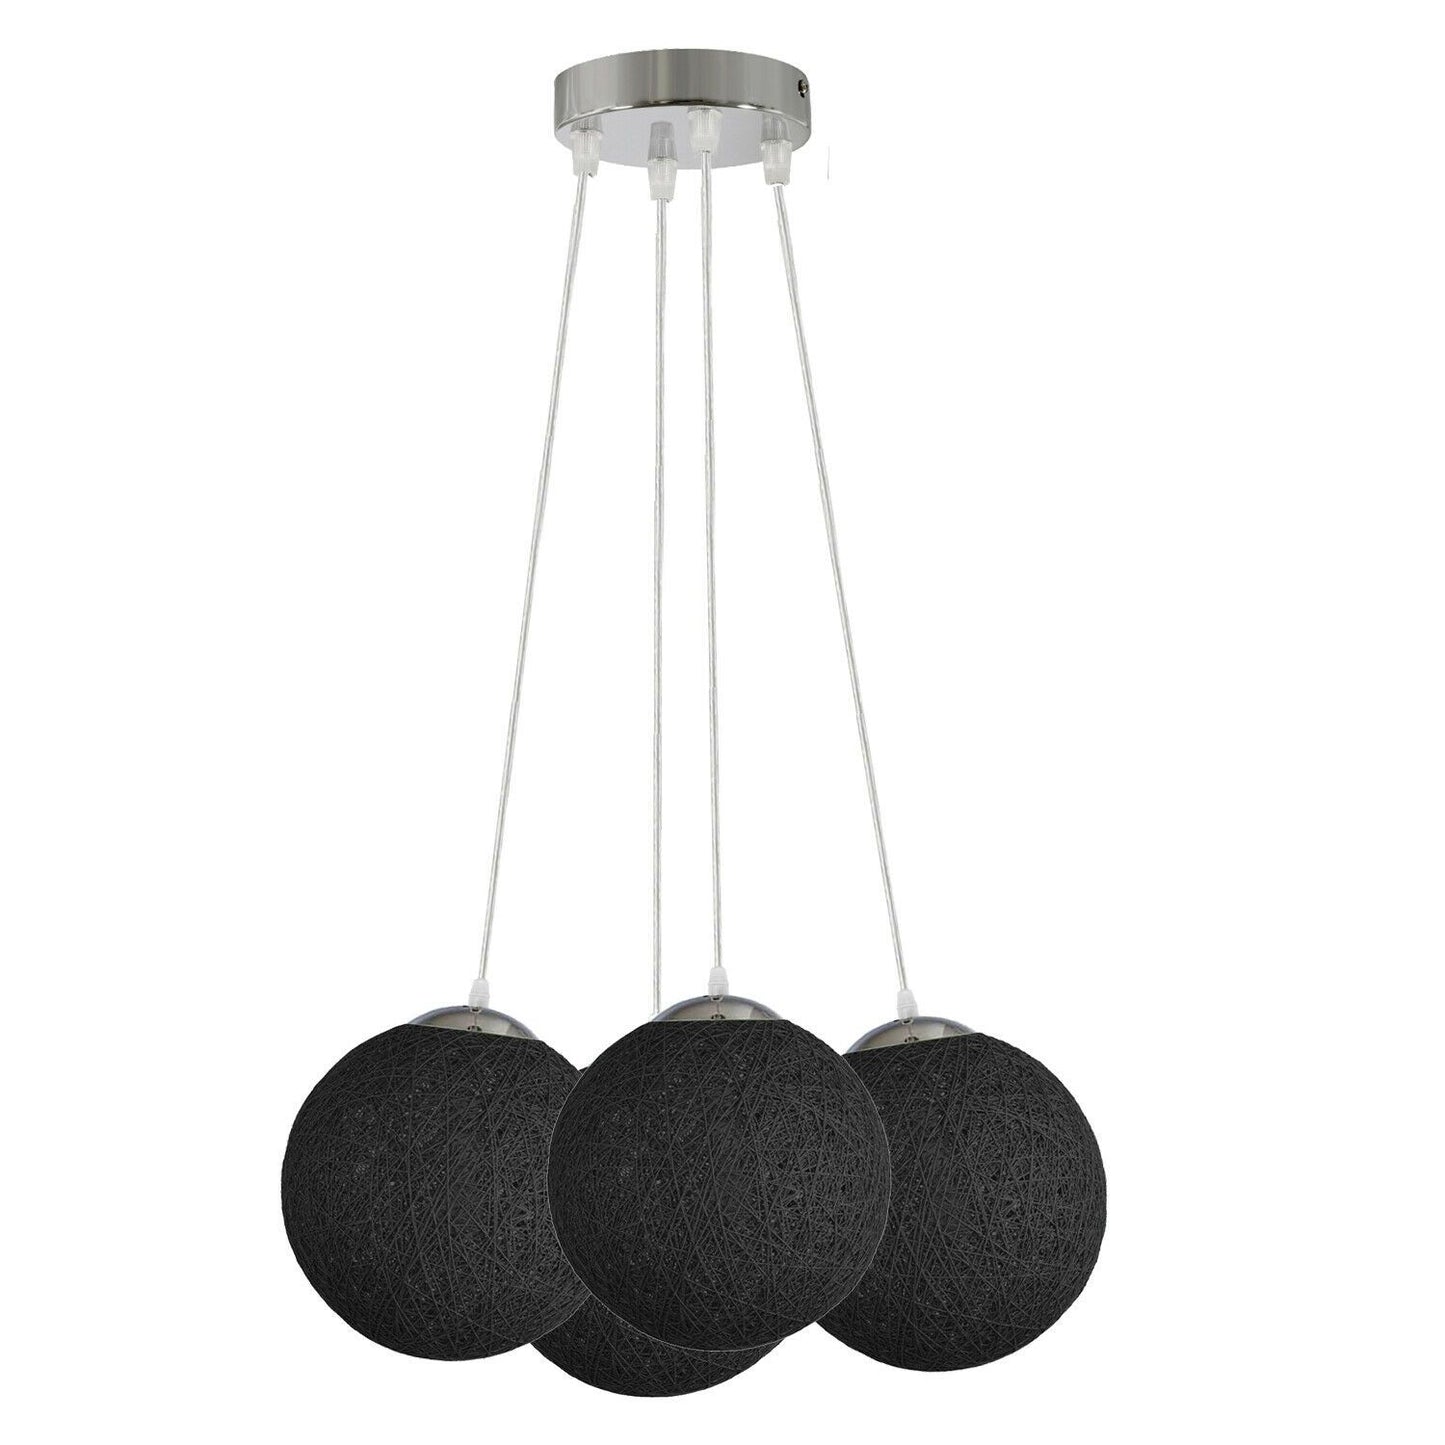 Black 3 Way Rattan Wicker Woven Ball Globe Pendant Light Shades